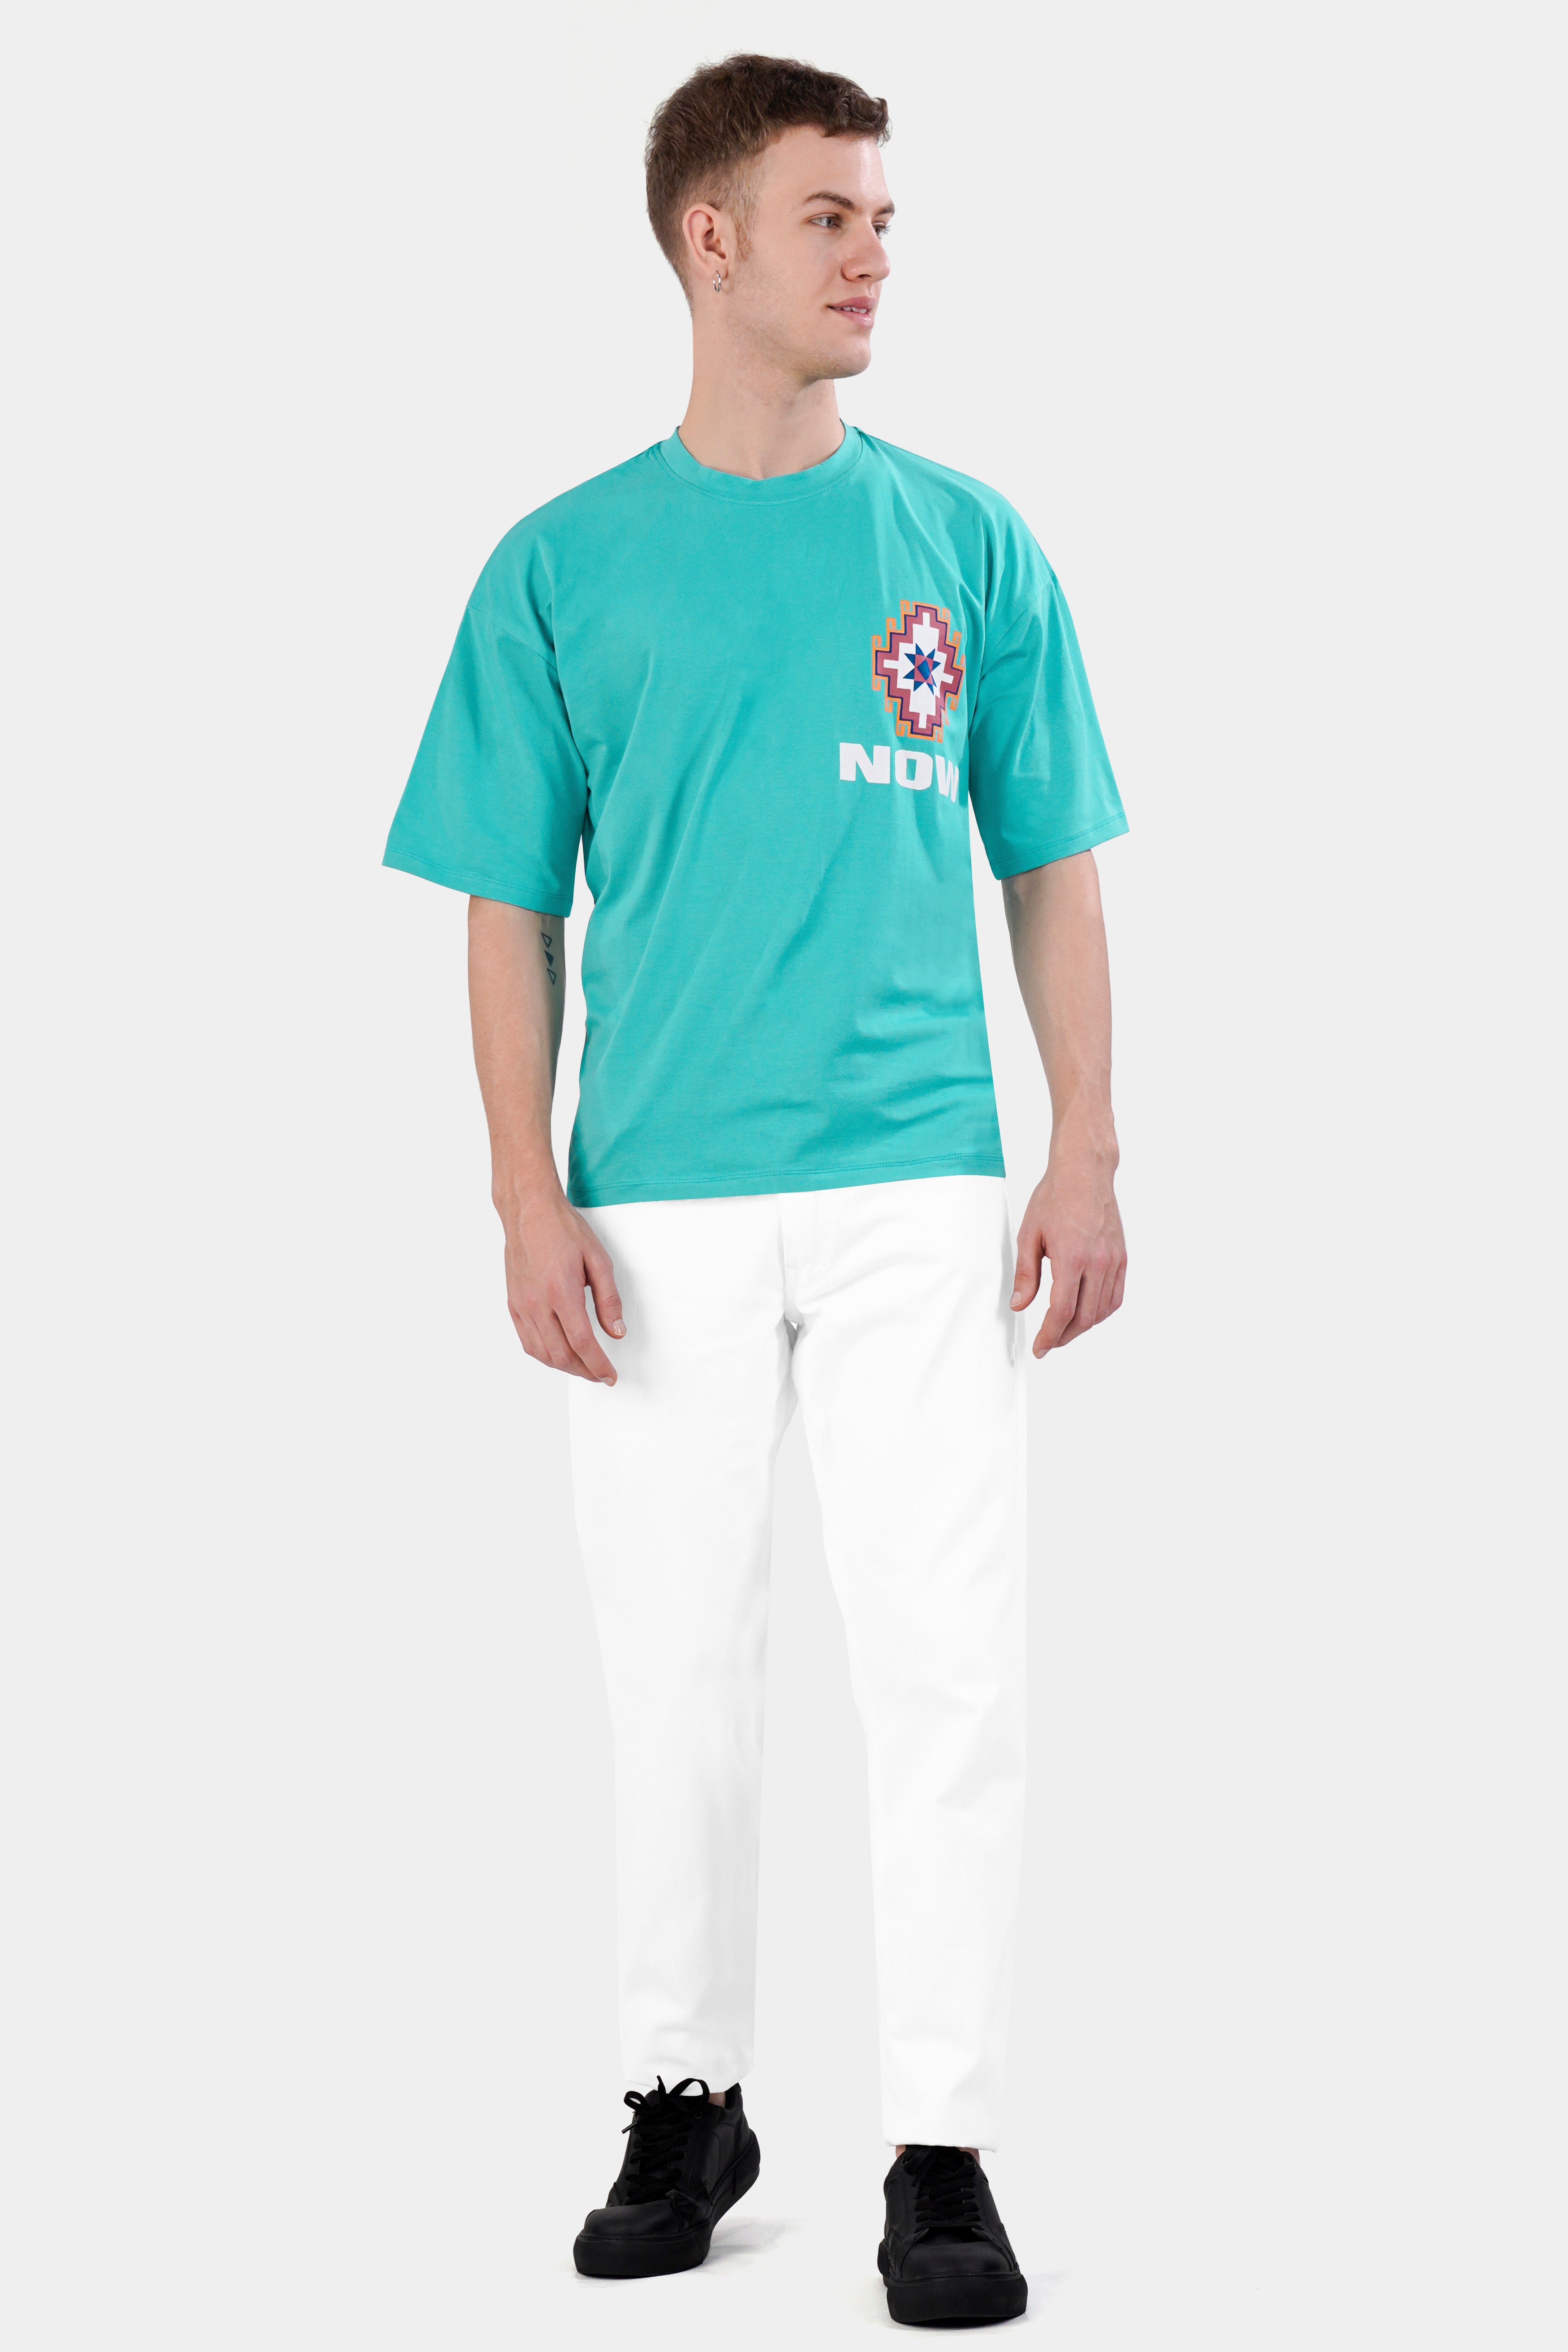 Aqua Blue Printed Premium Cotton Oversized T-shirt TS950-S, TS950-M, TS950-L, TS950-XL, TS950-XXL